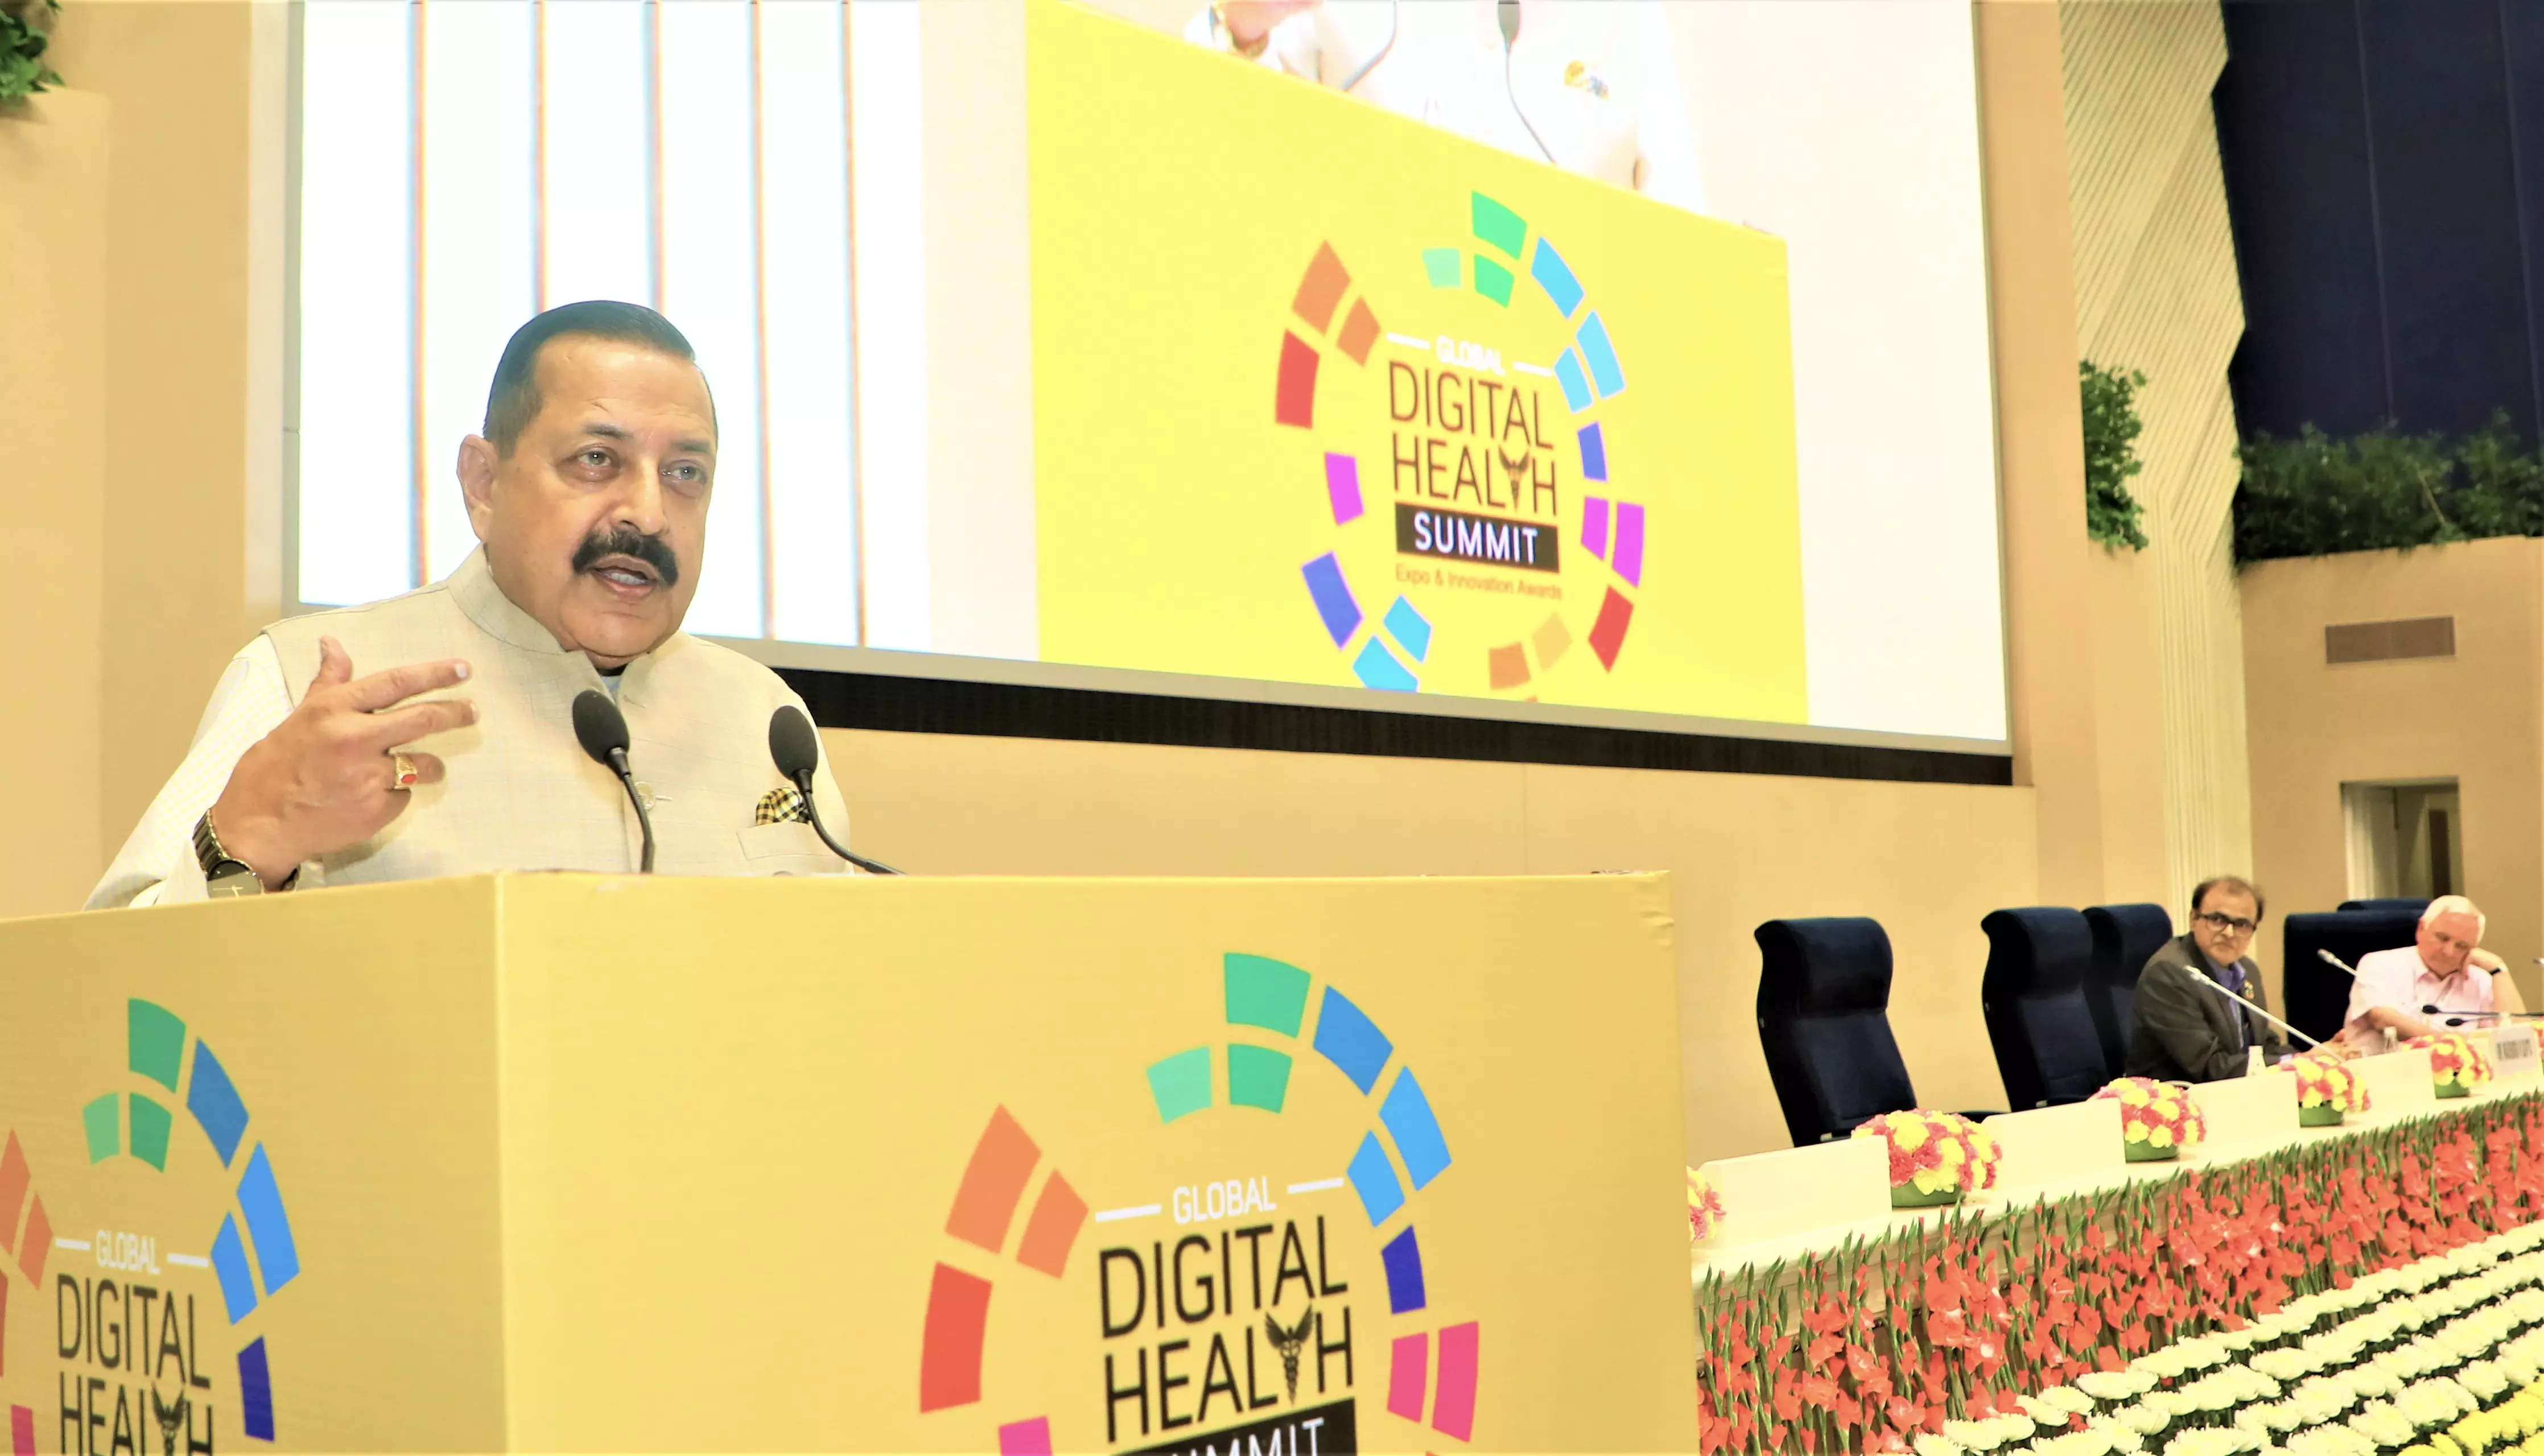 Digital Health Summit: